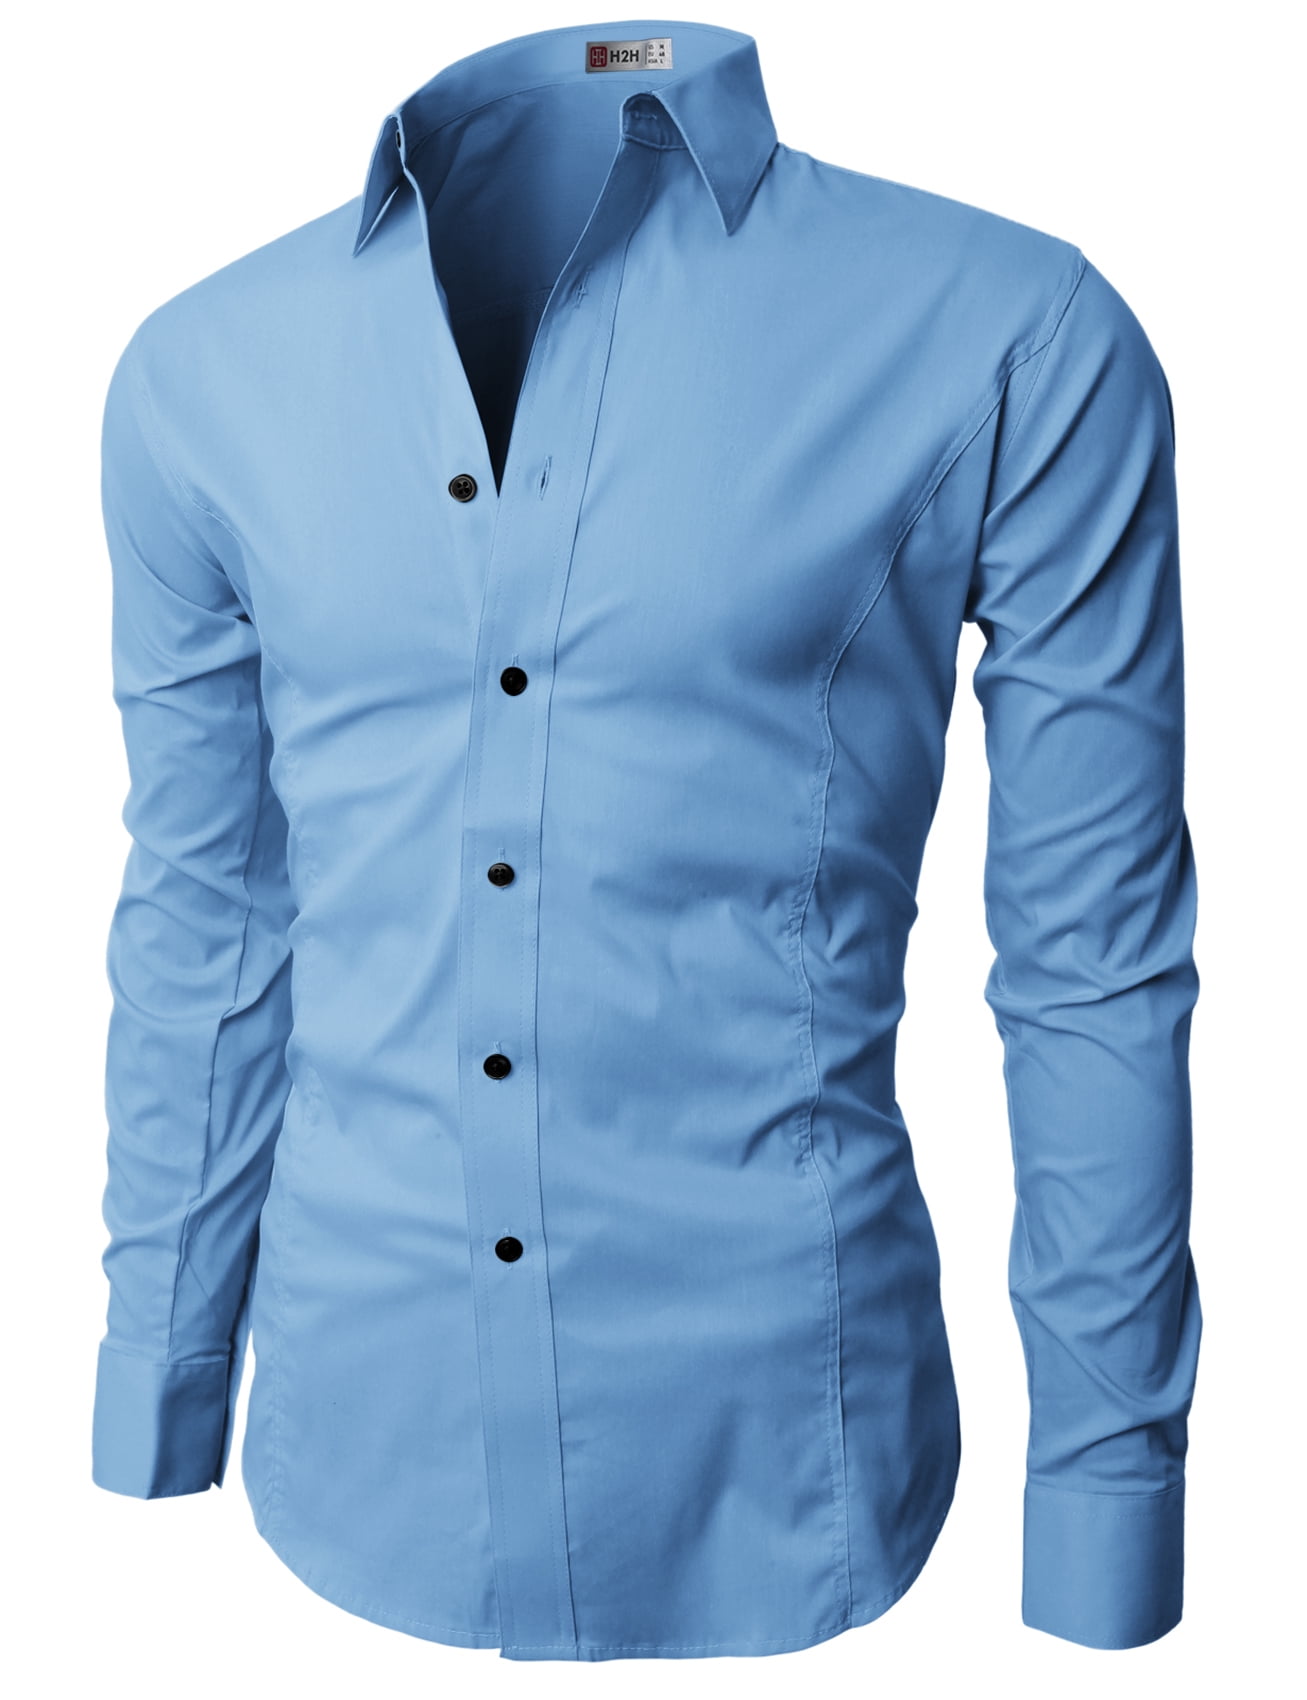 H2H Mens Dress Slim Fit Shirts Long Sleeve Business Shirts Basic Designed Breathable